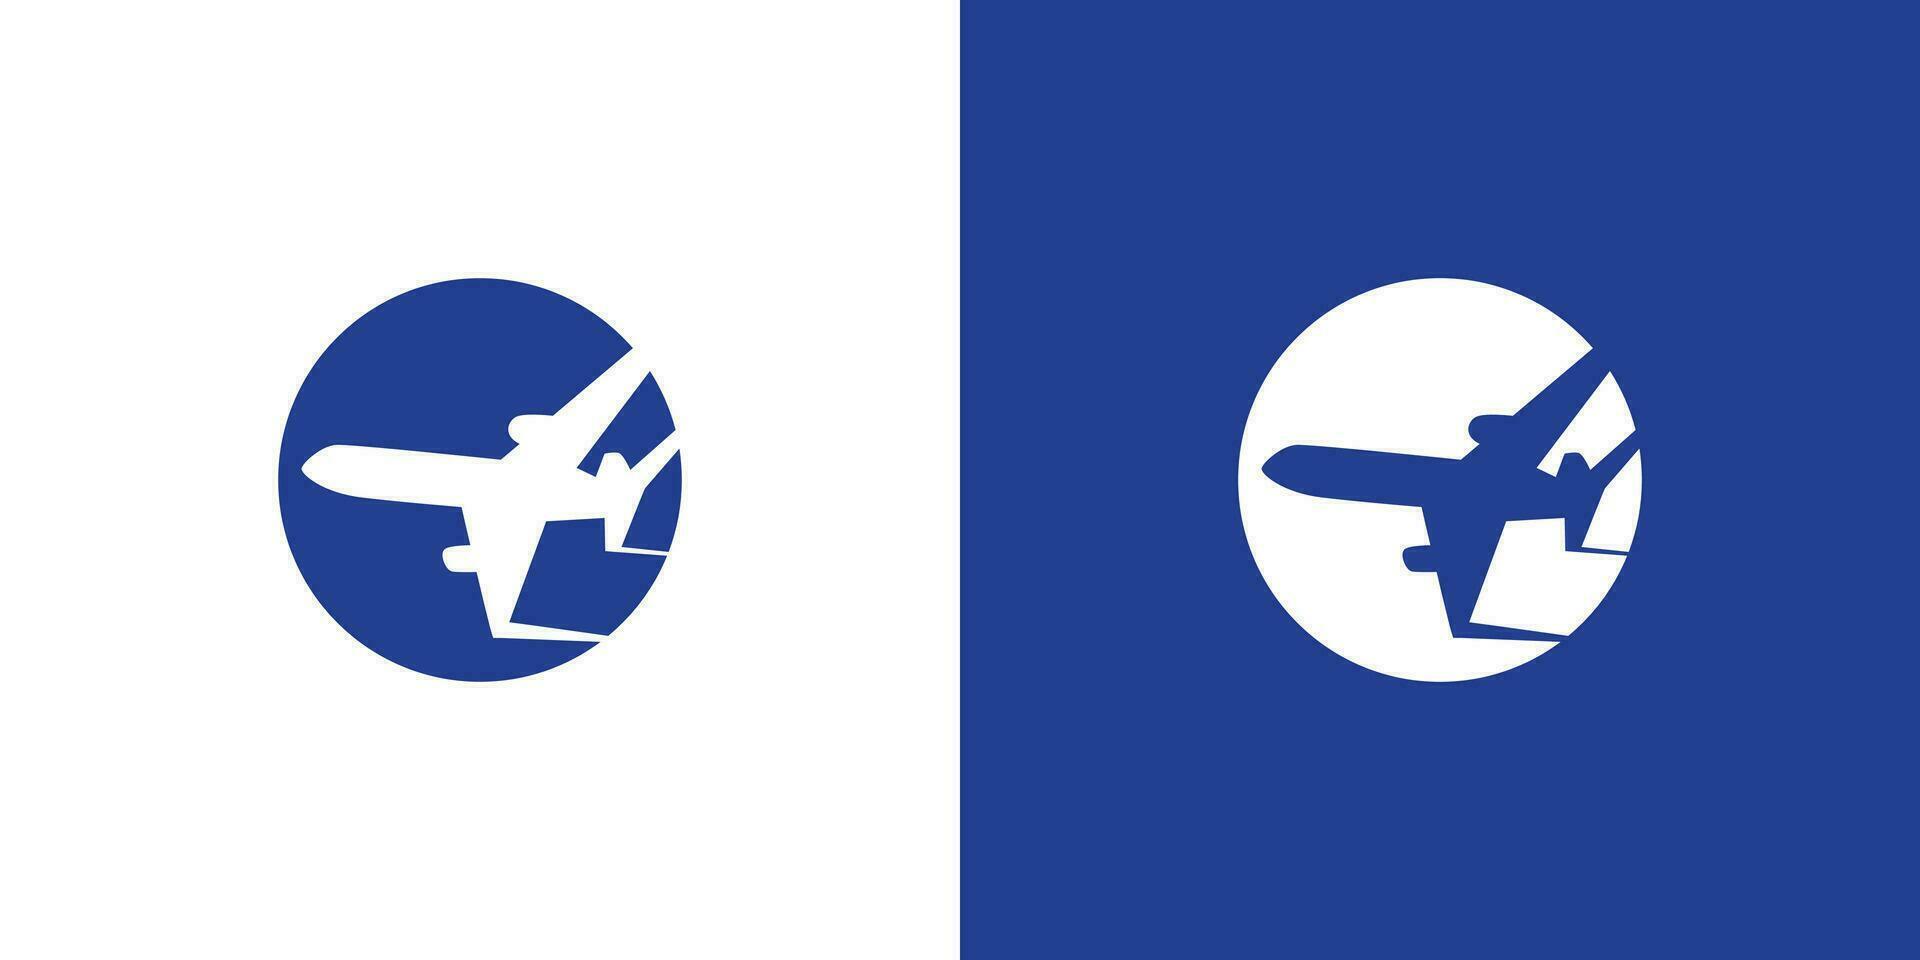 moderno e unico aereo viaggio logo design vettore